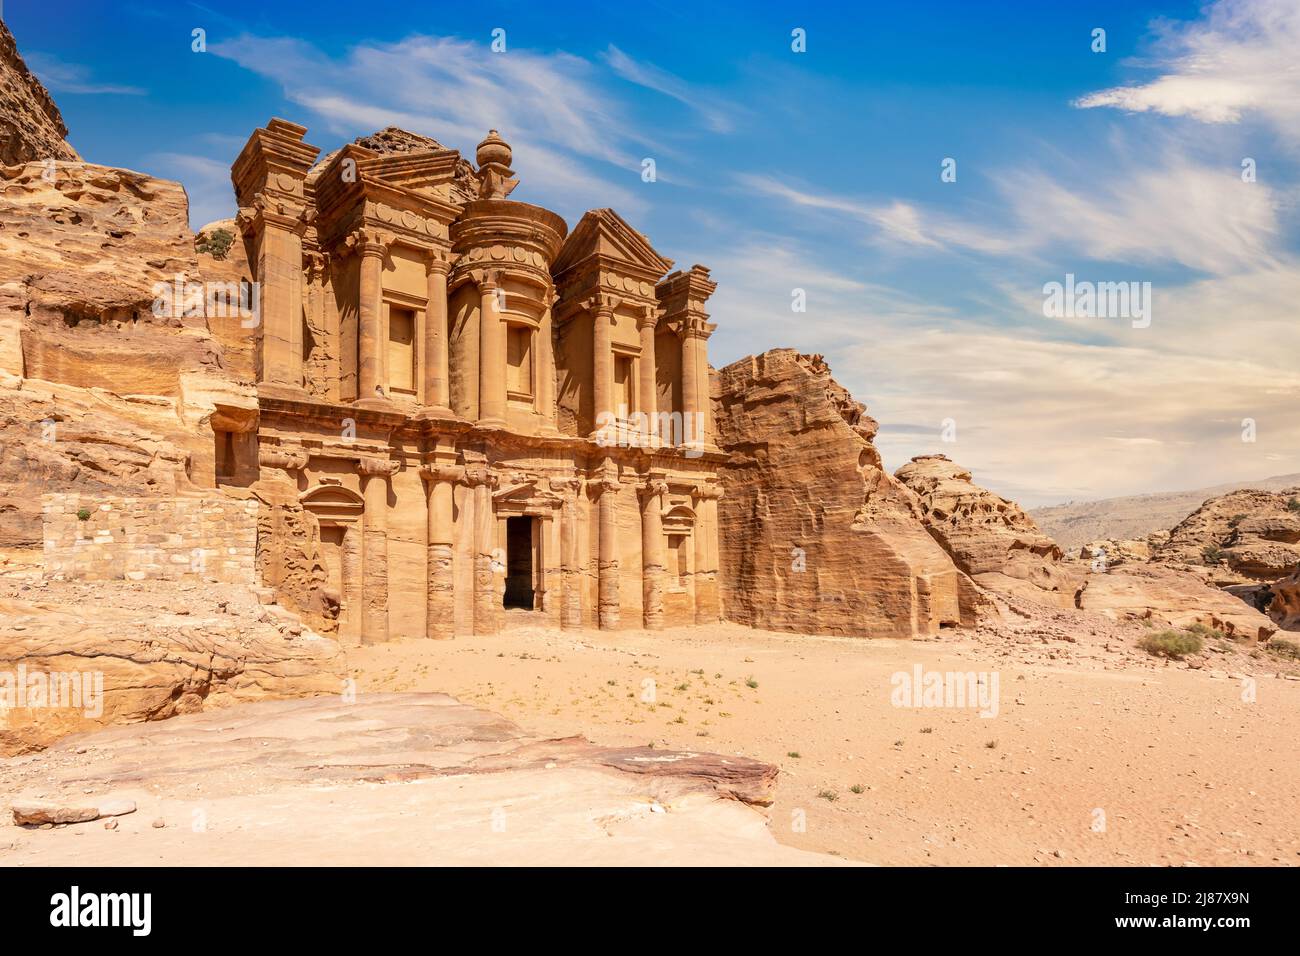 Ad Deir or The Monastery, ancient Nabataean stone carved temple, Petra, Jordan Stock Photo